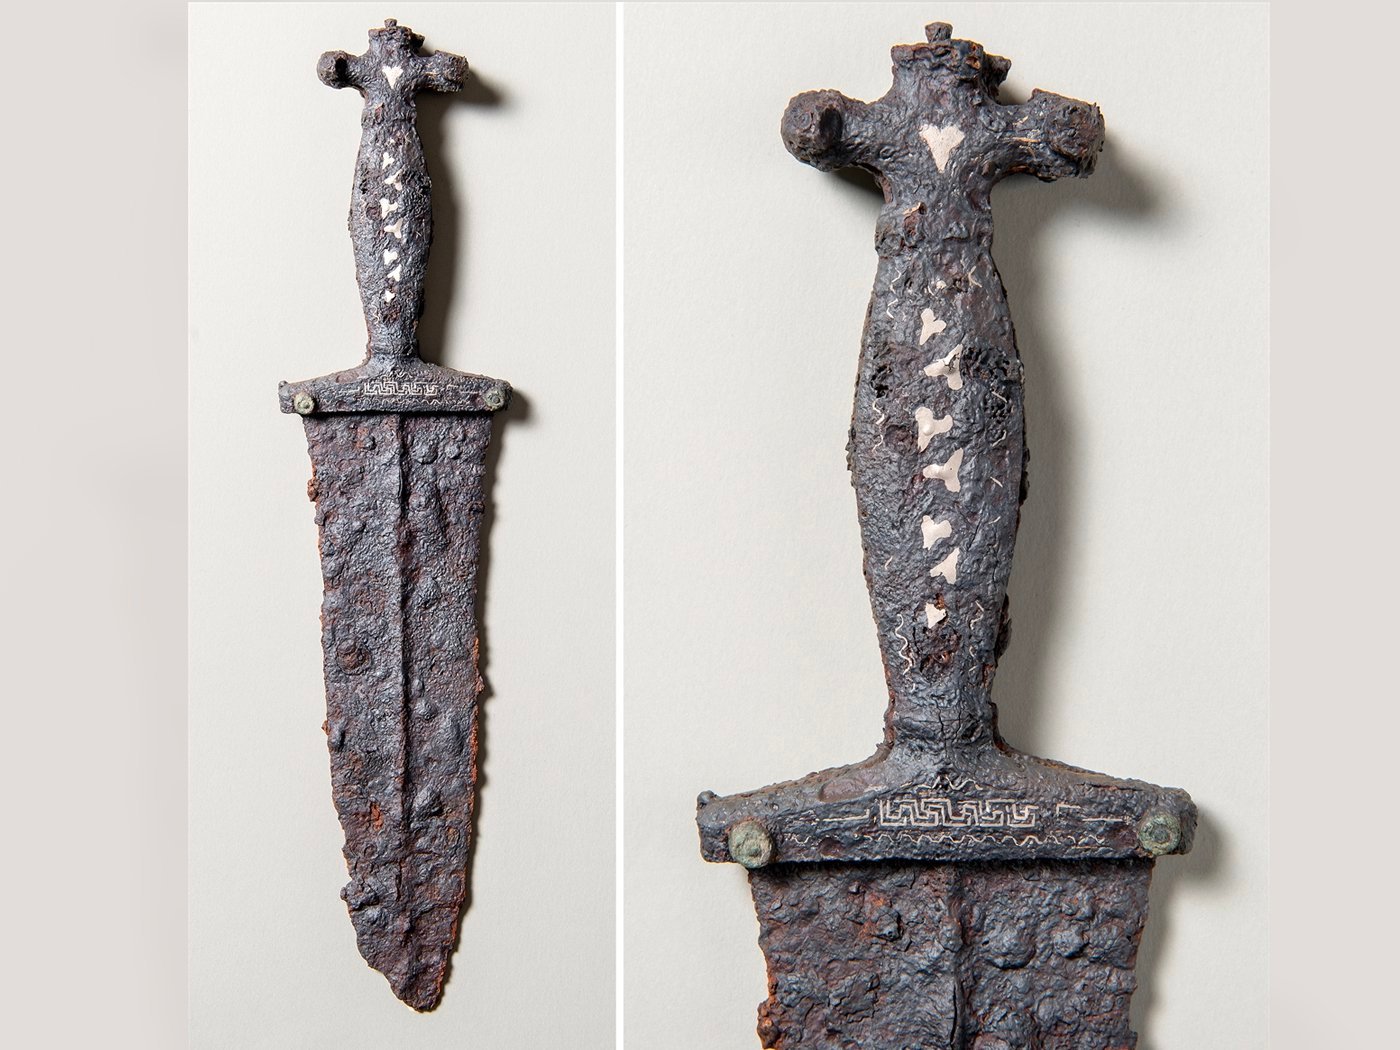 Amateur Archaeologist in Switzerland Unearths 2k-Year-Old Roman Dagger